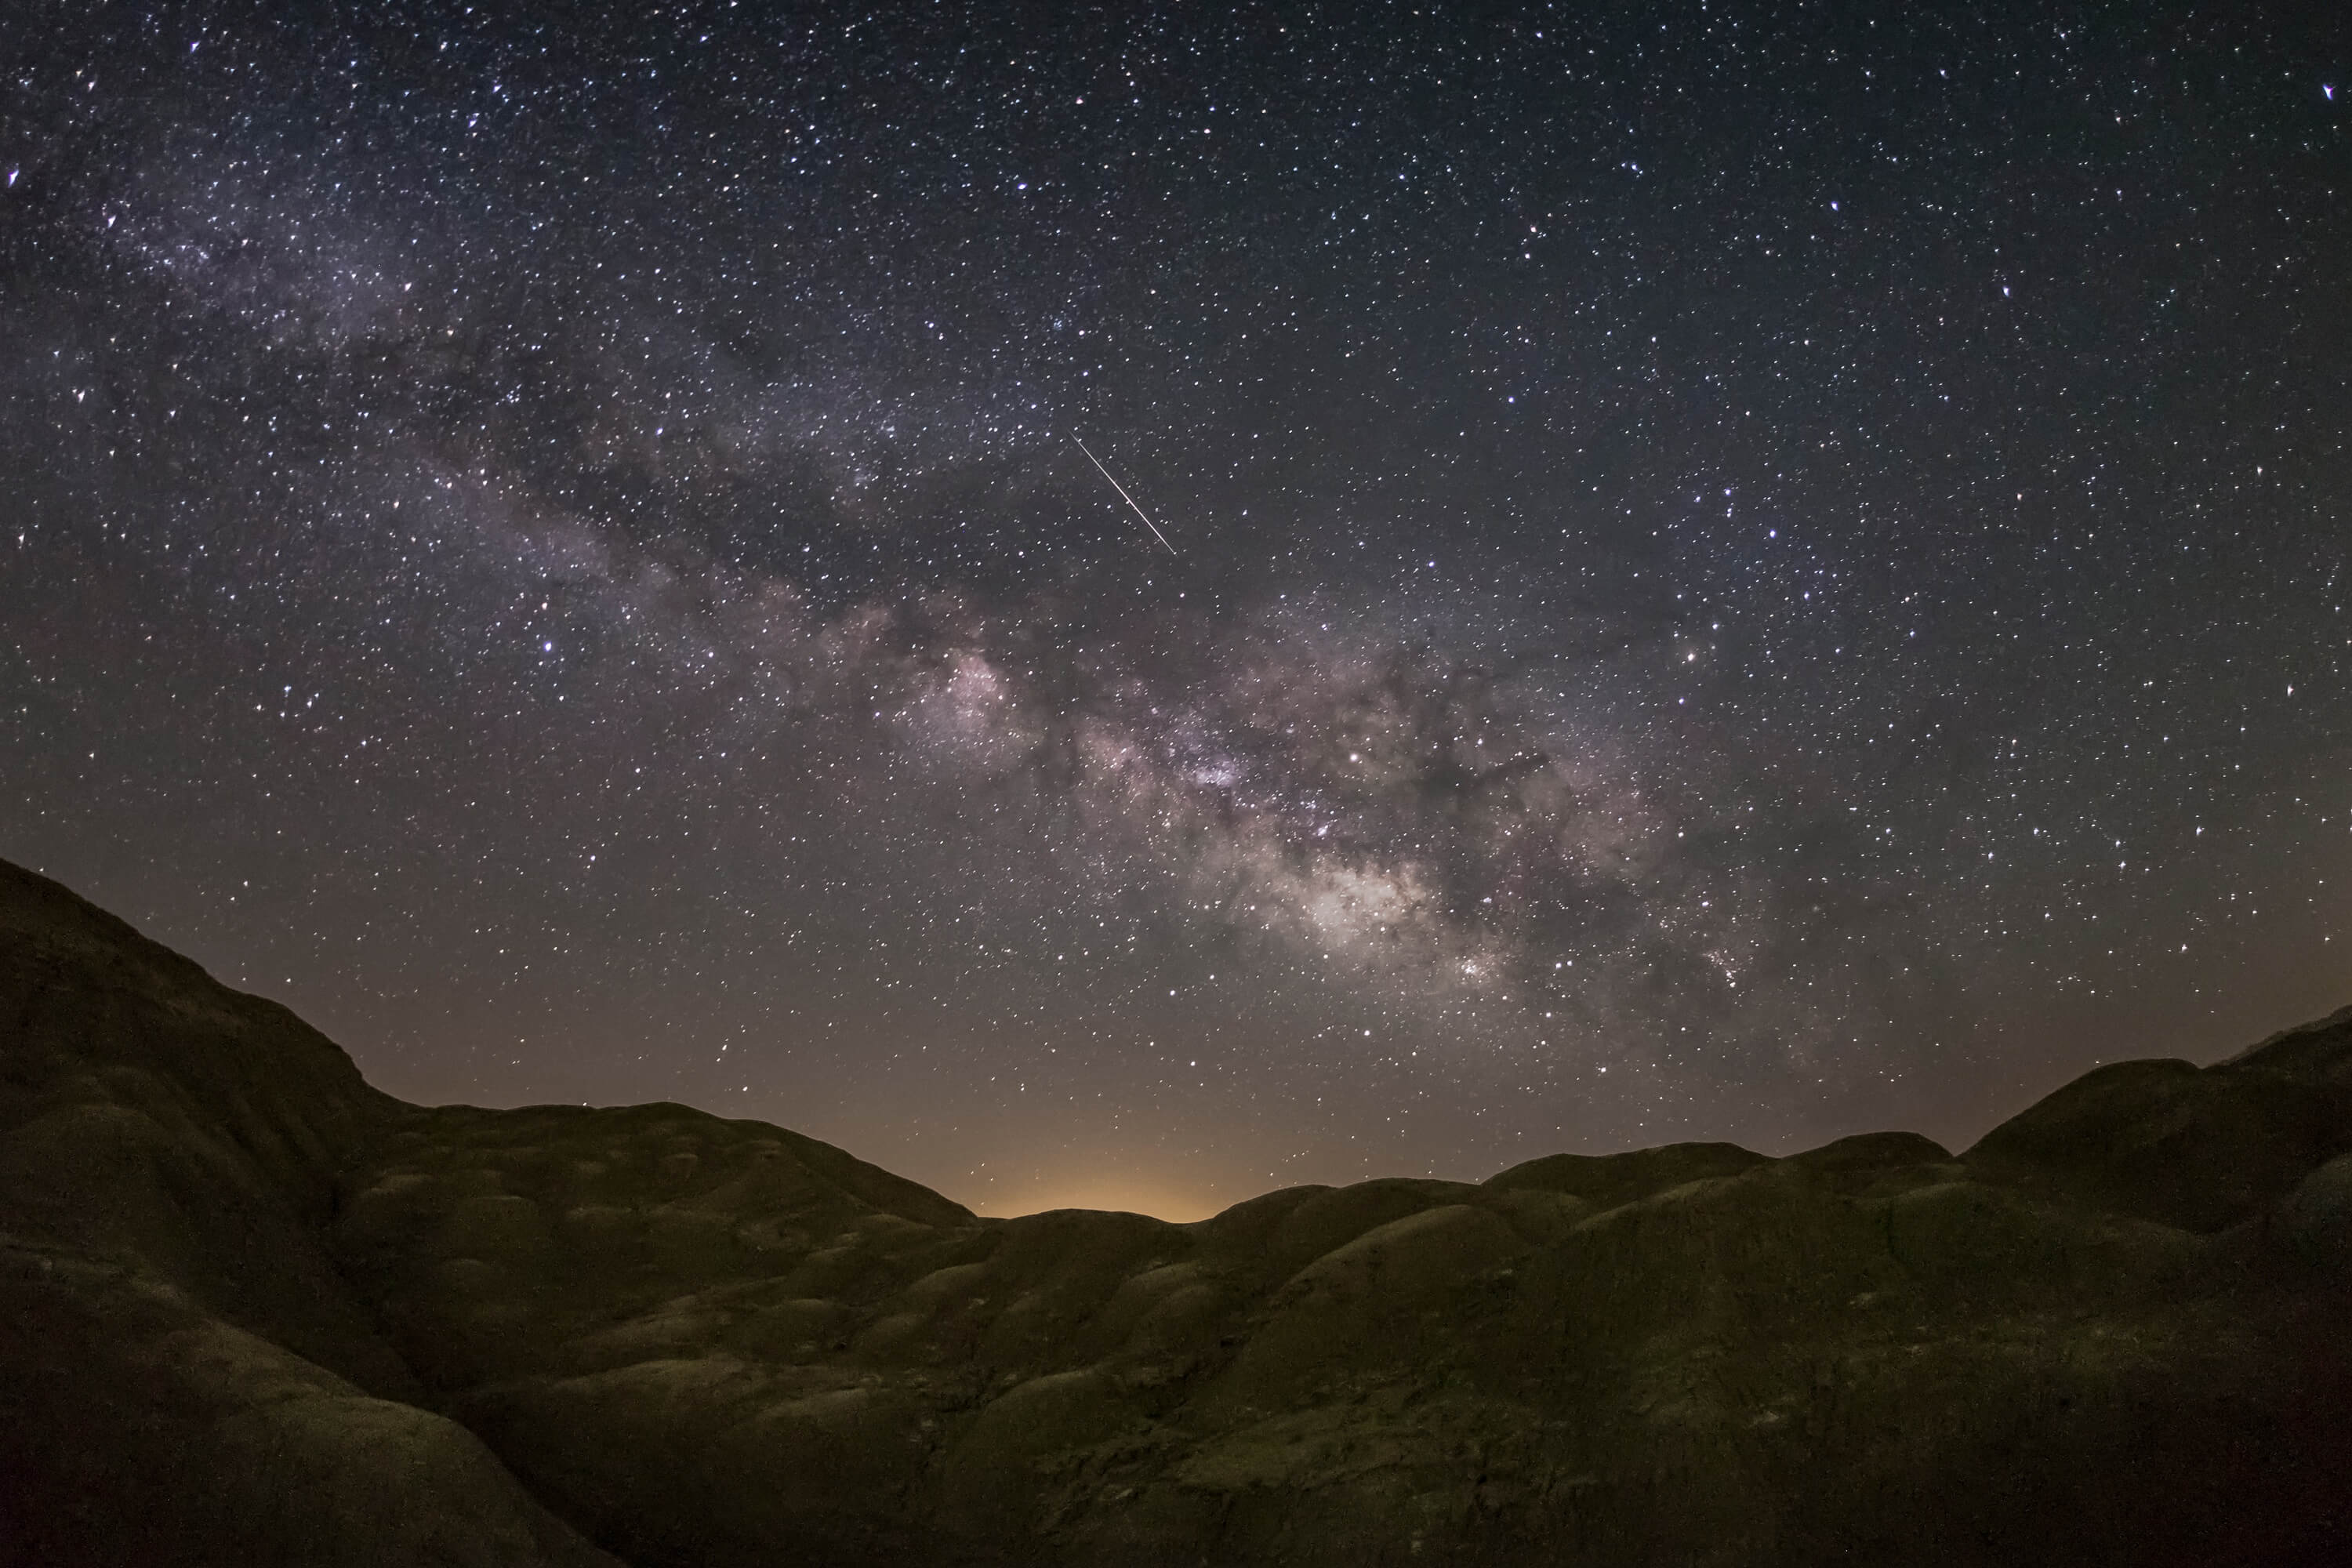 The stars in the desert landscape in Borrego Springs, California